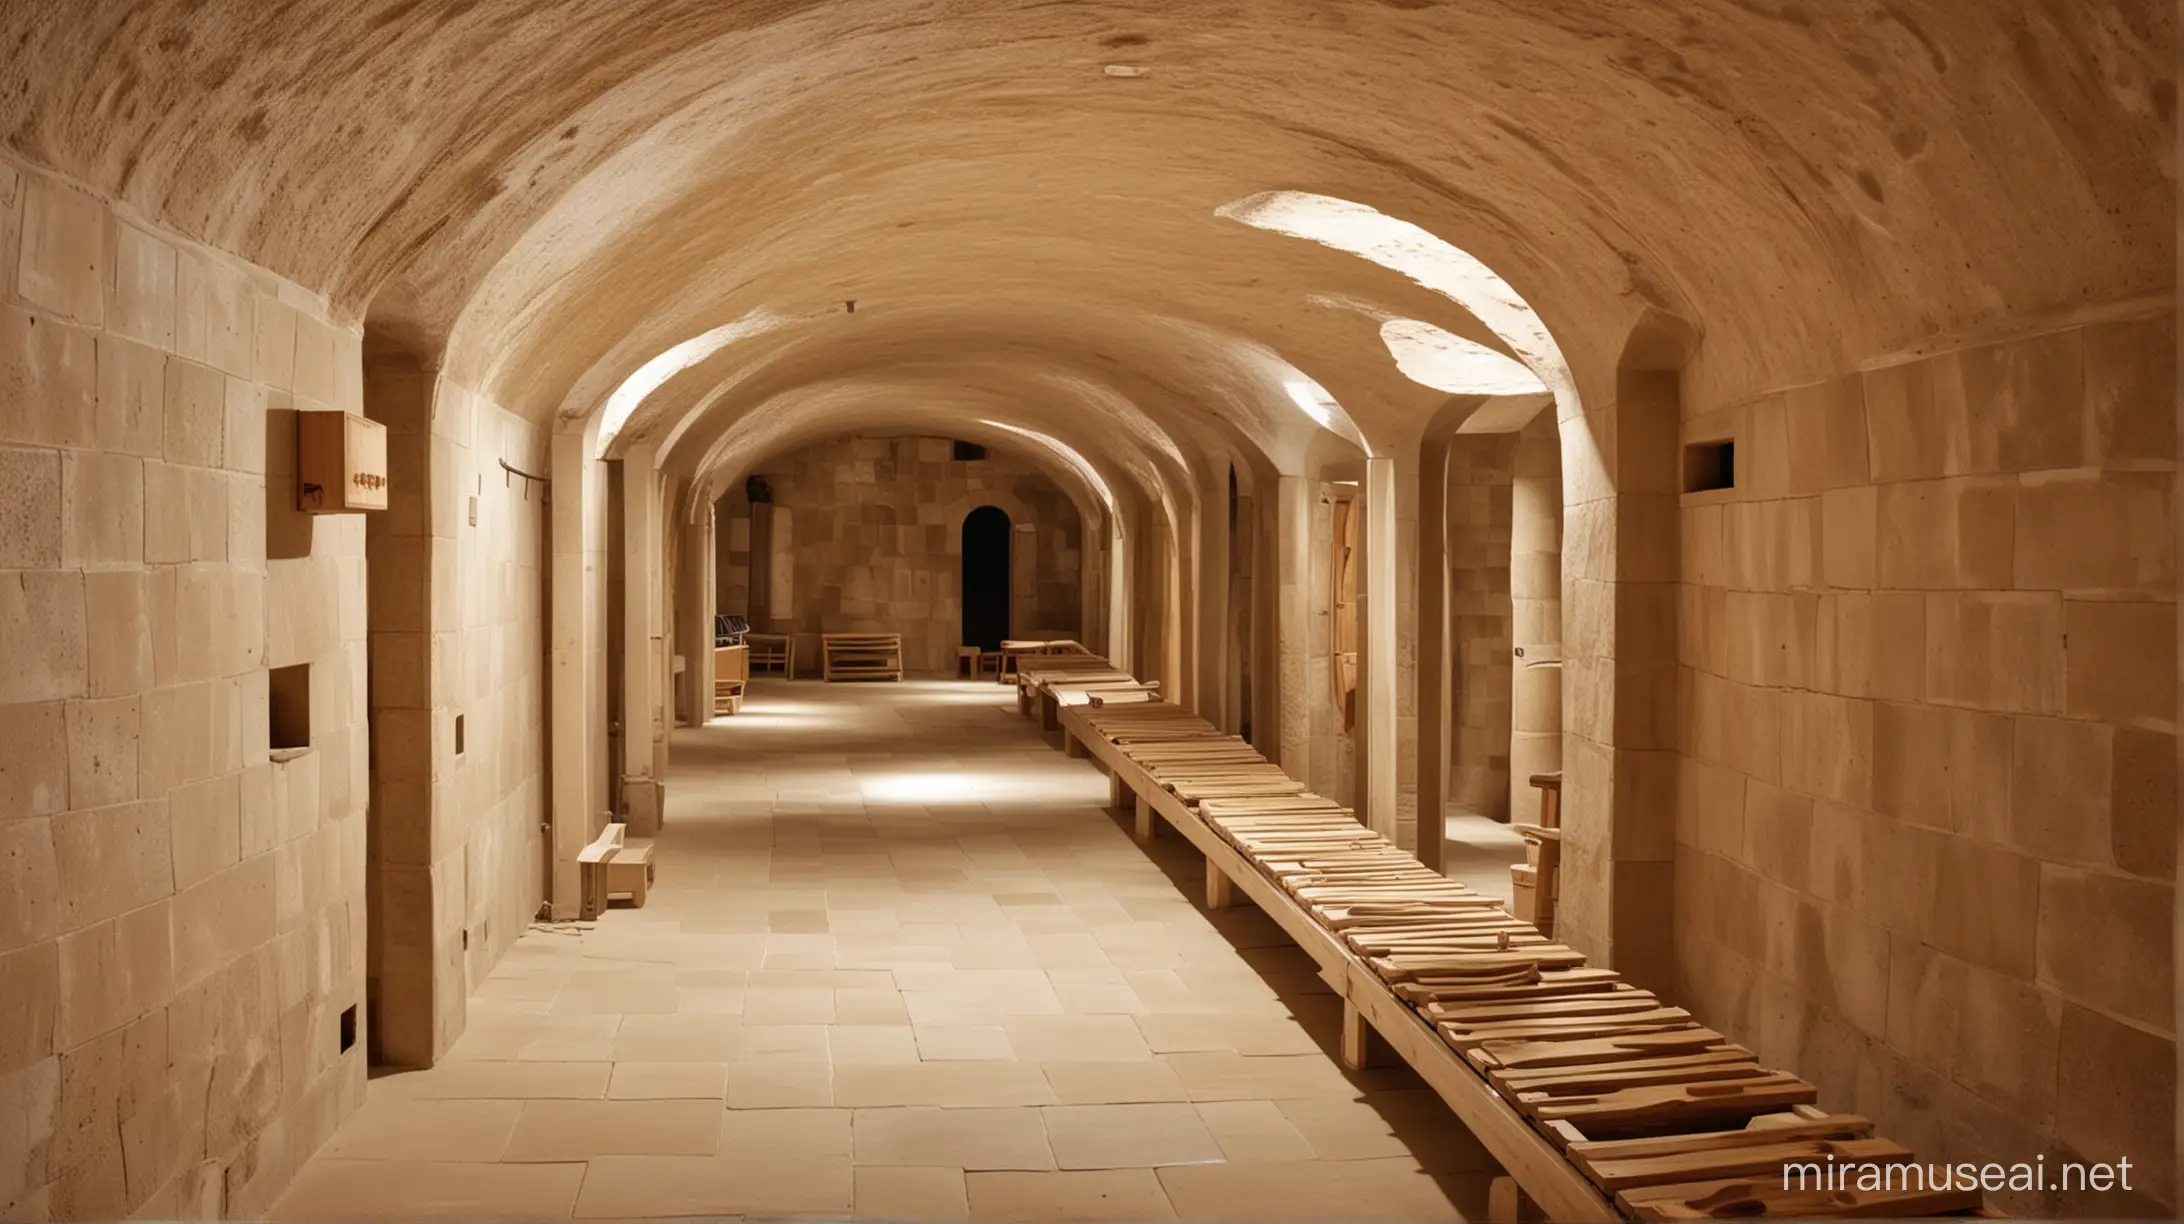 Elongated Catacomb Sauna Chamber Subterranean Relaxation Retreat